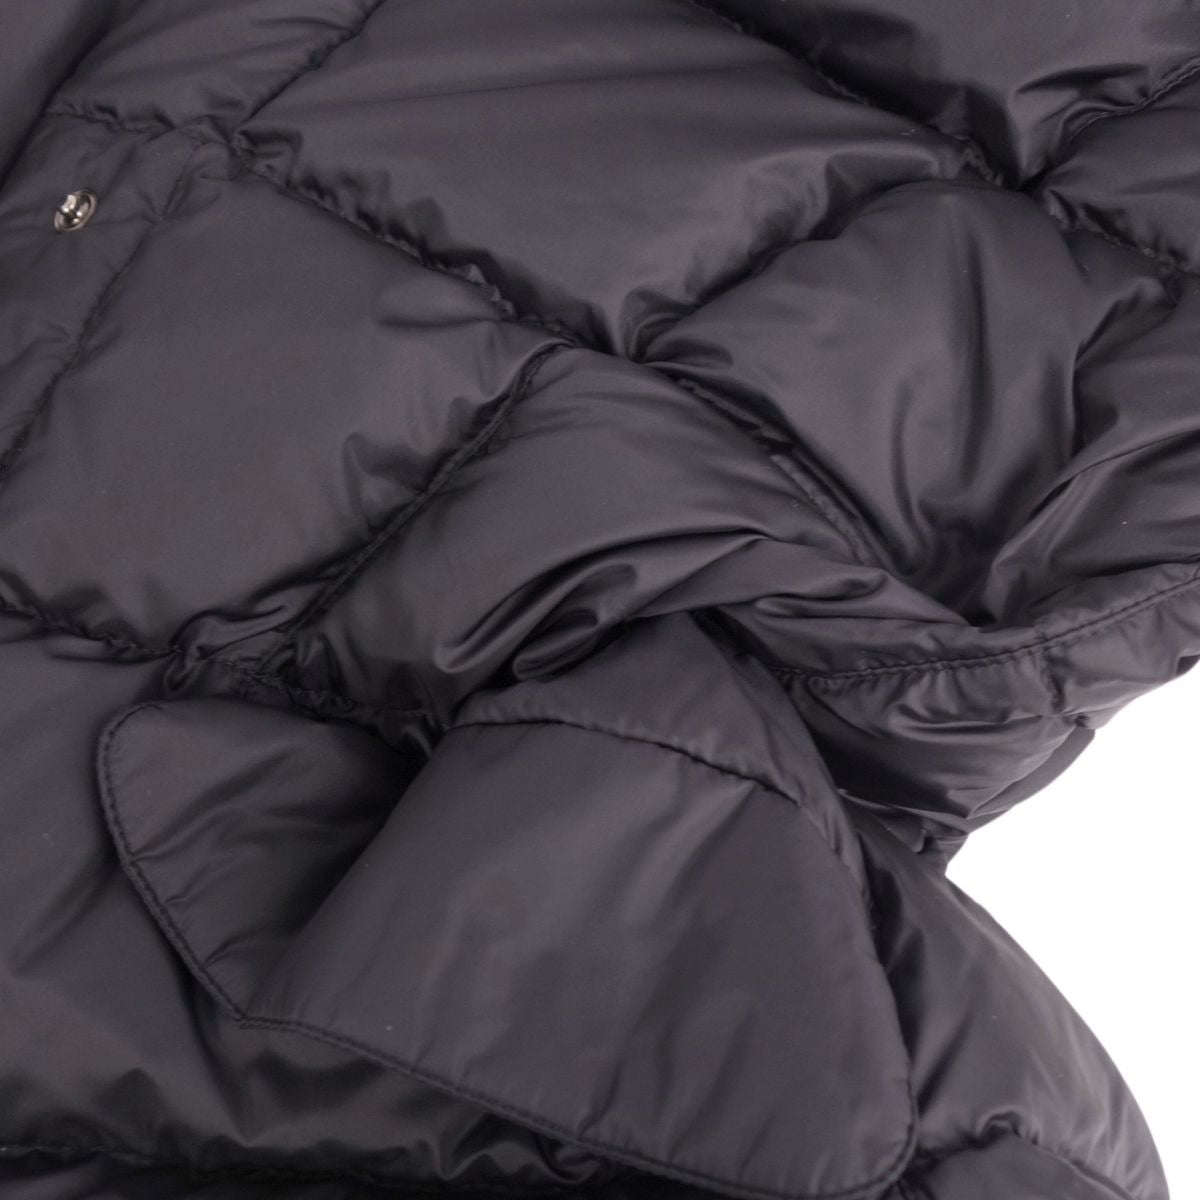 Salvatore Ferragamo Jacket Down Jacket Nylon   42 (M Equivalent) Black  NIV